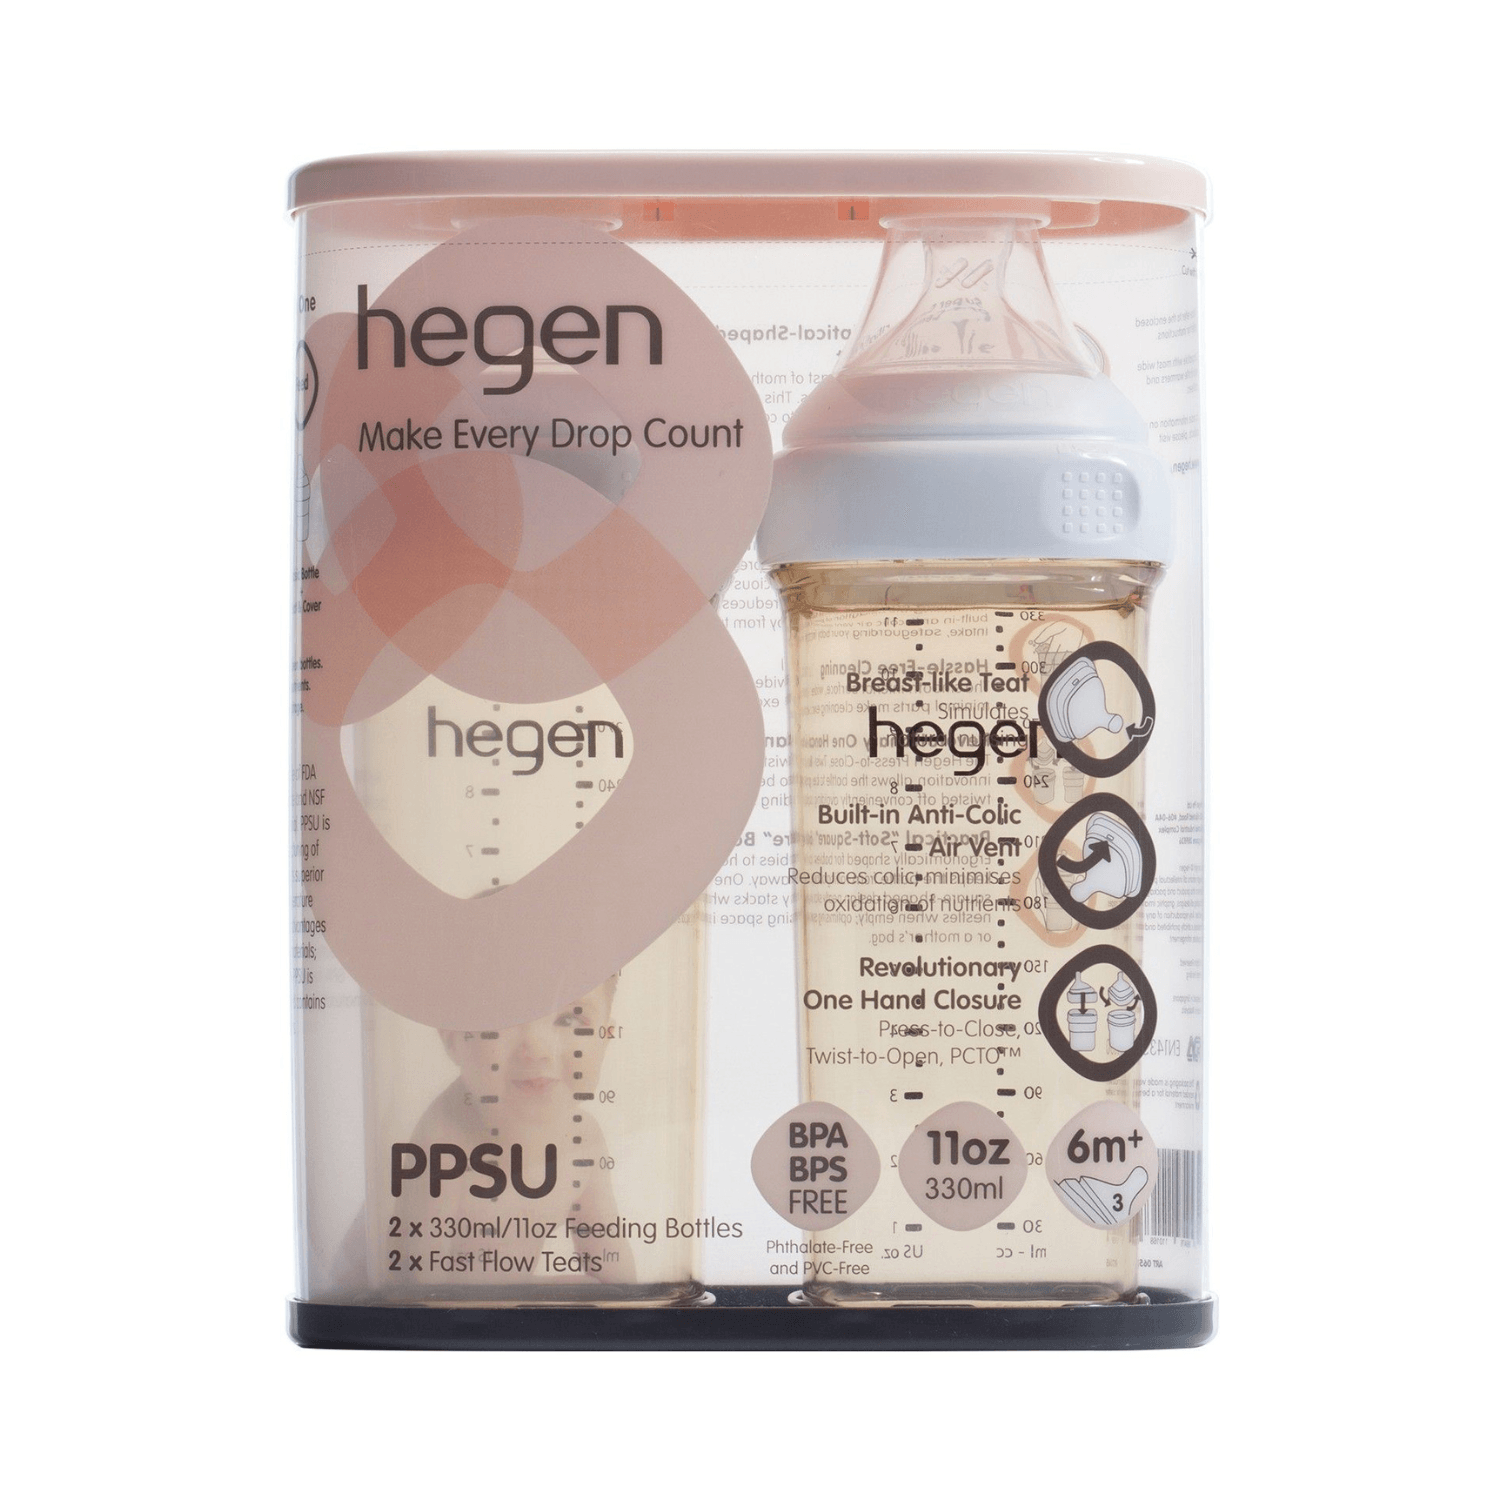 Hegen PCTO™ 150ml/5oz Feeding Bottle PPSU with Slow Flow Nipple (1 to